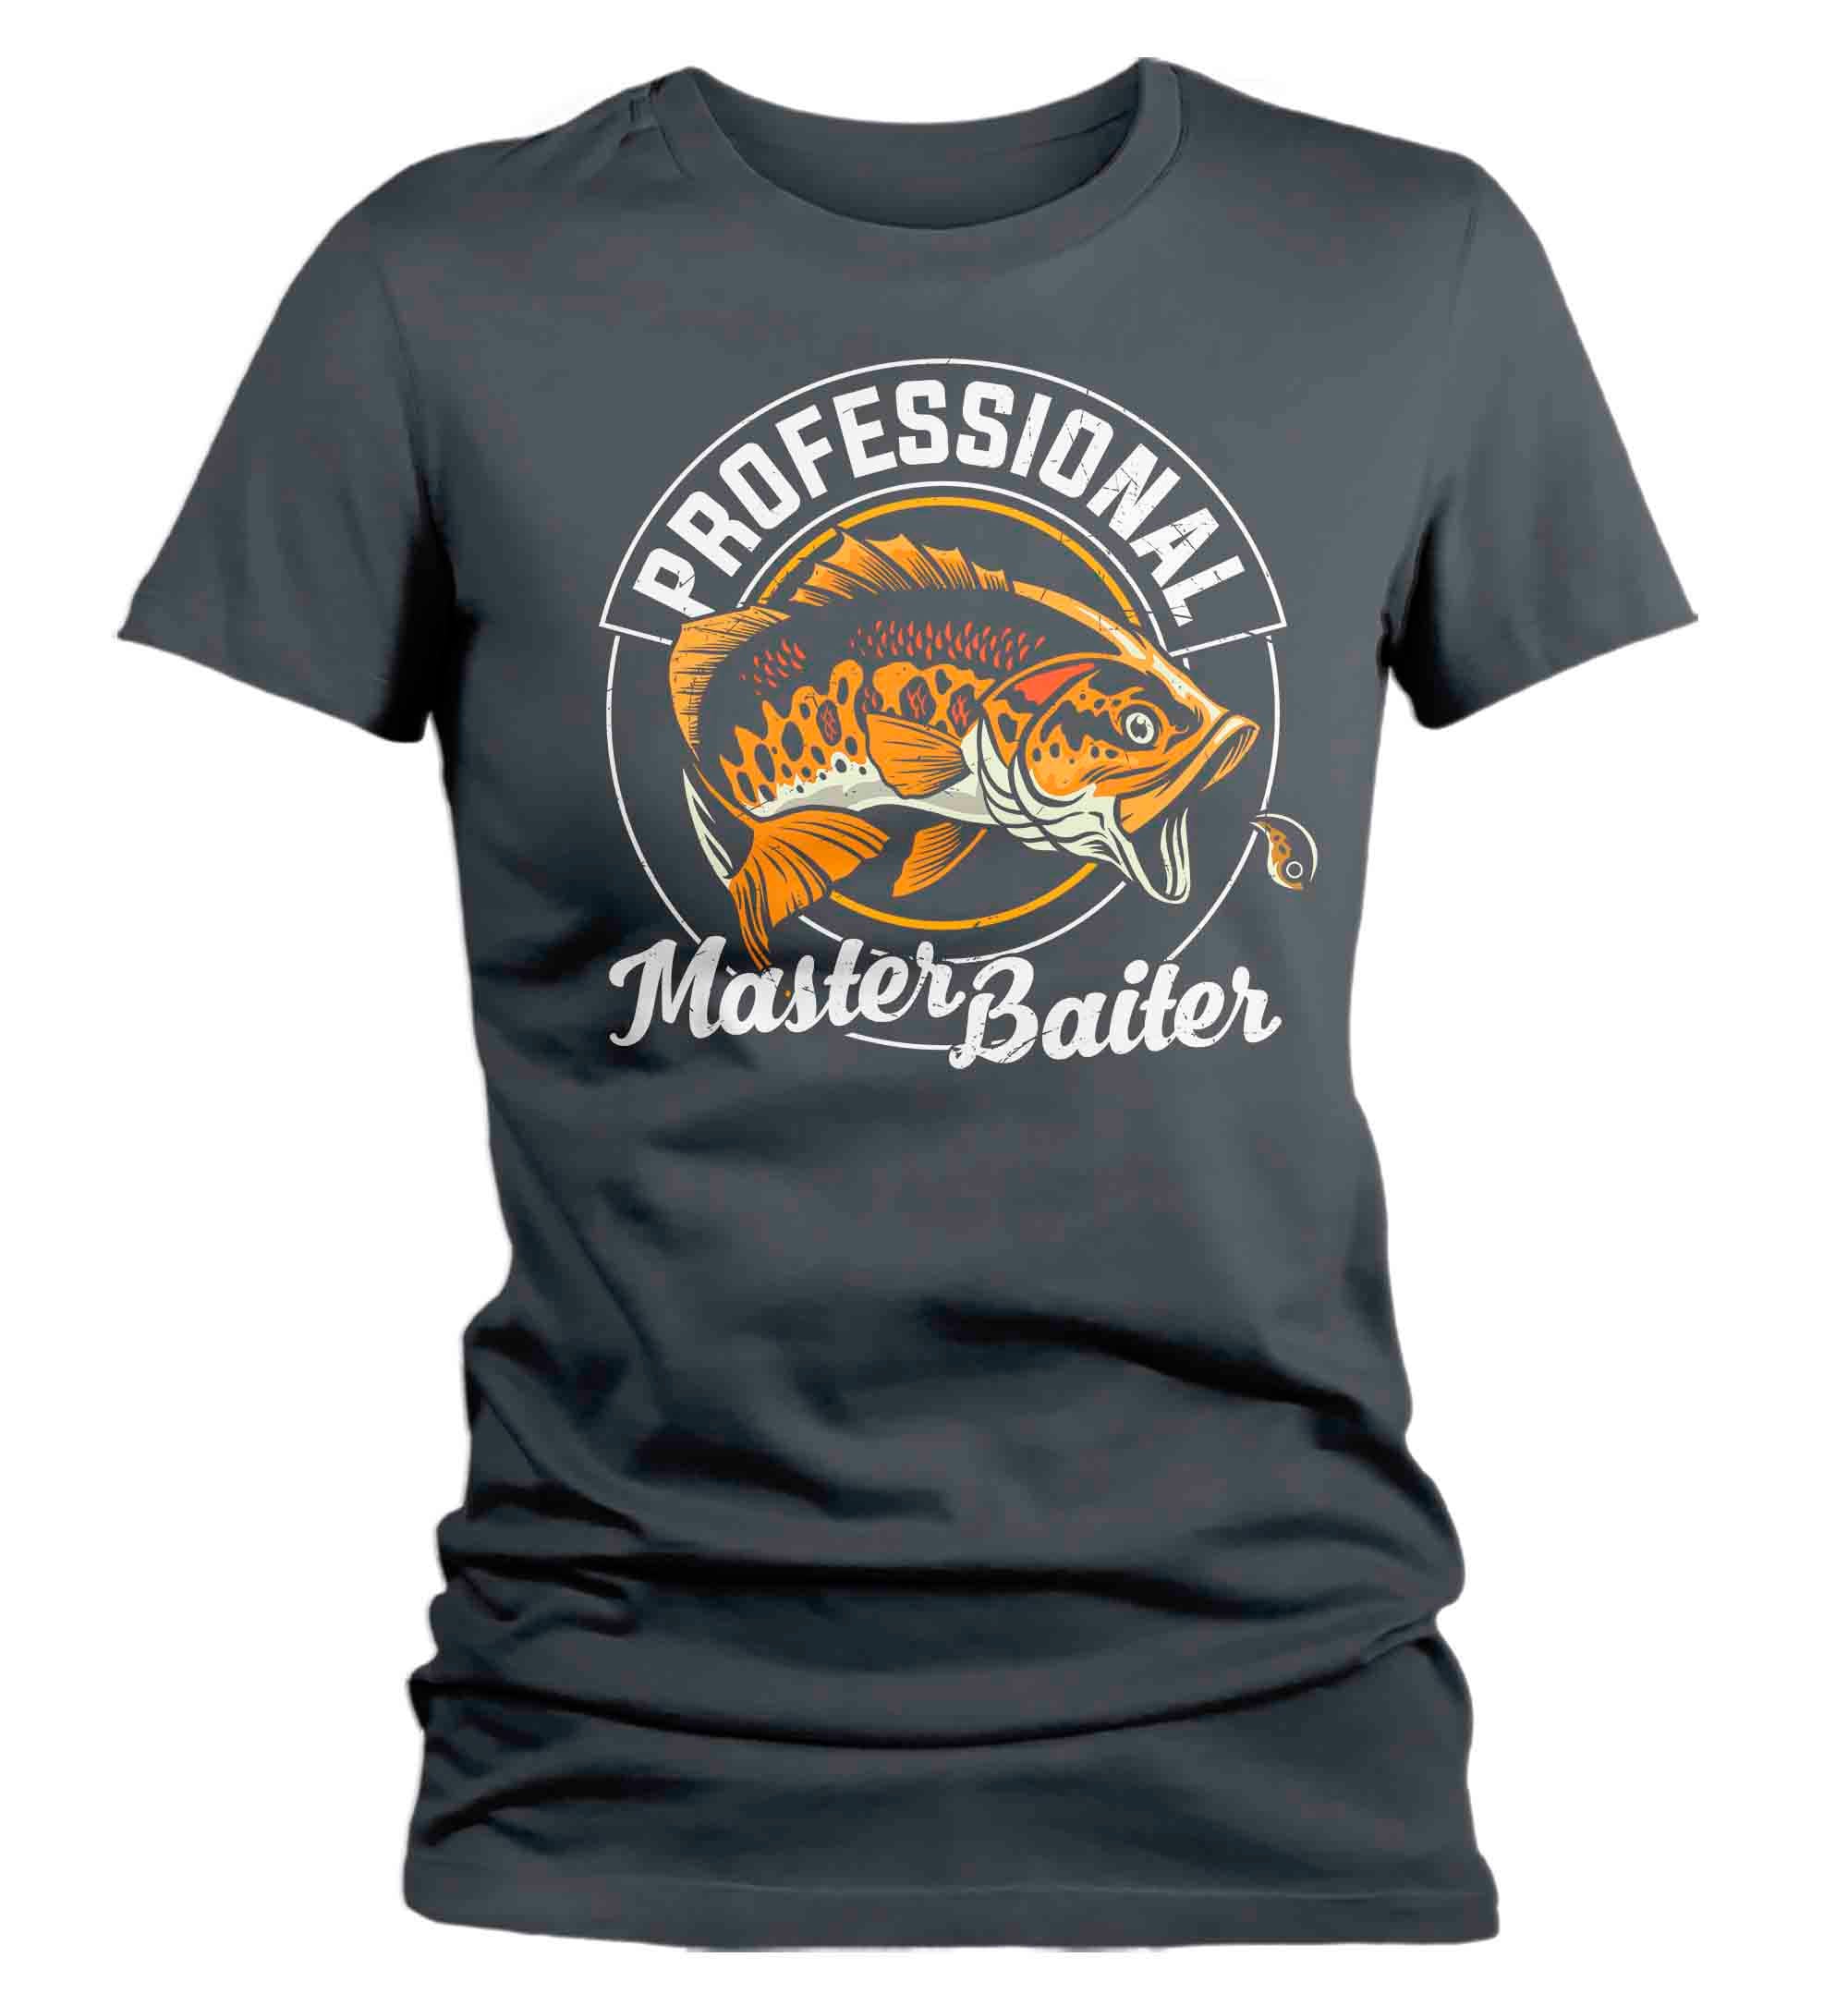 Women's Funny Fishing T-Shirt Professional Master Baiter Vintage Shirt Fisherman Gift Humor Bass Fish Tee Ladies Graphic Tee